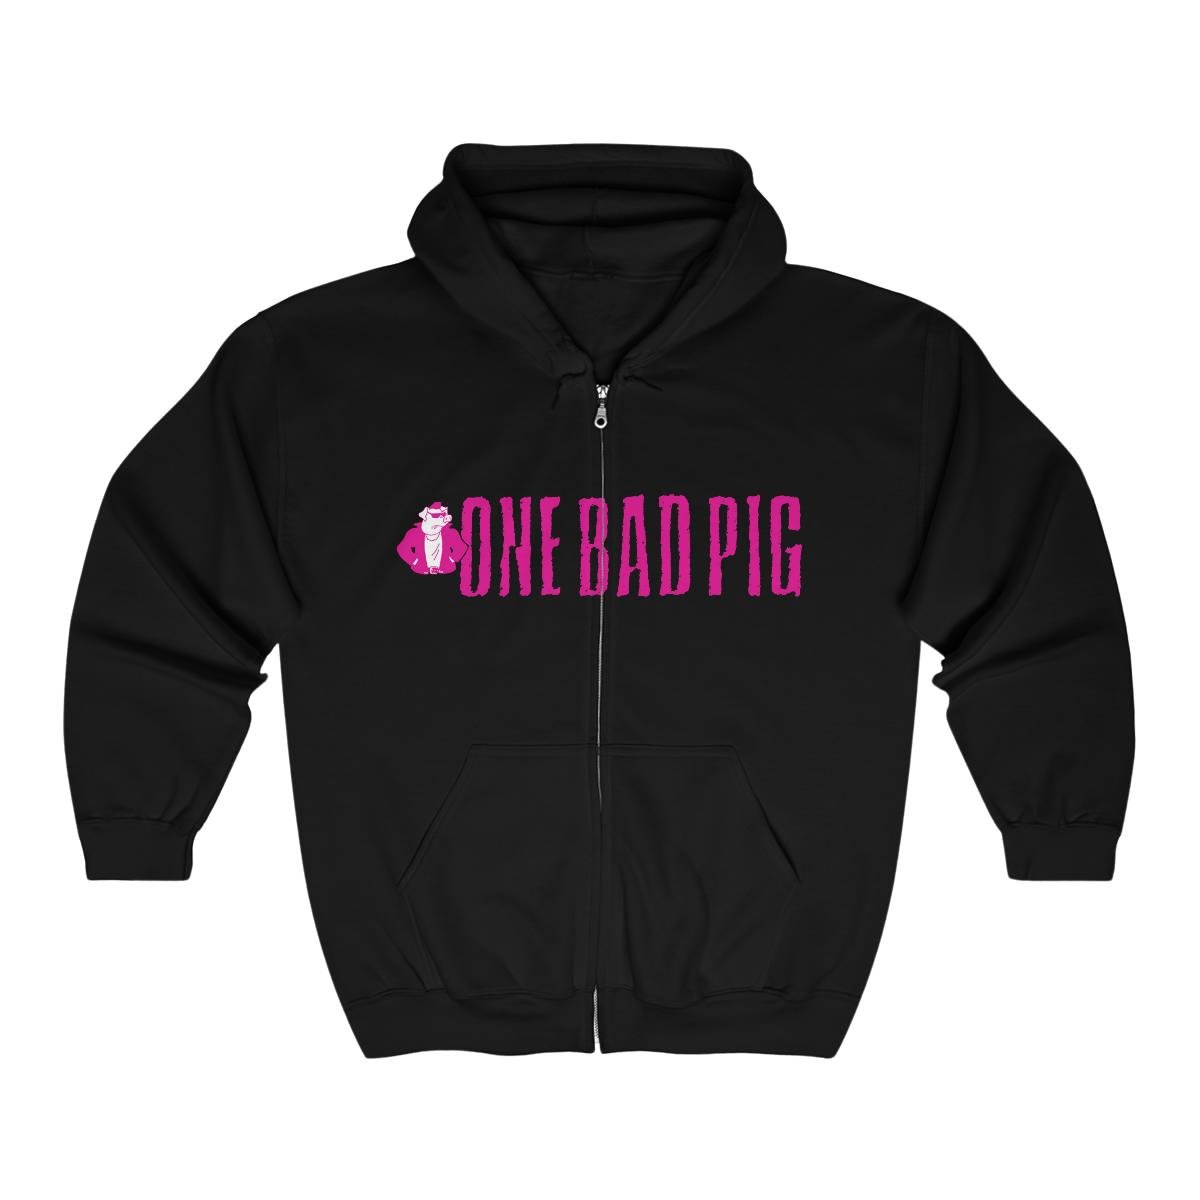 One Bad Pig Smash Logo Full Zip Hooded Sweatshirt